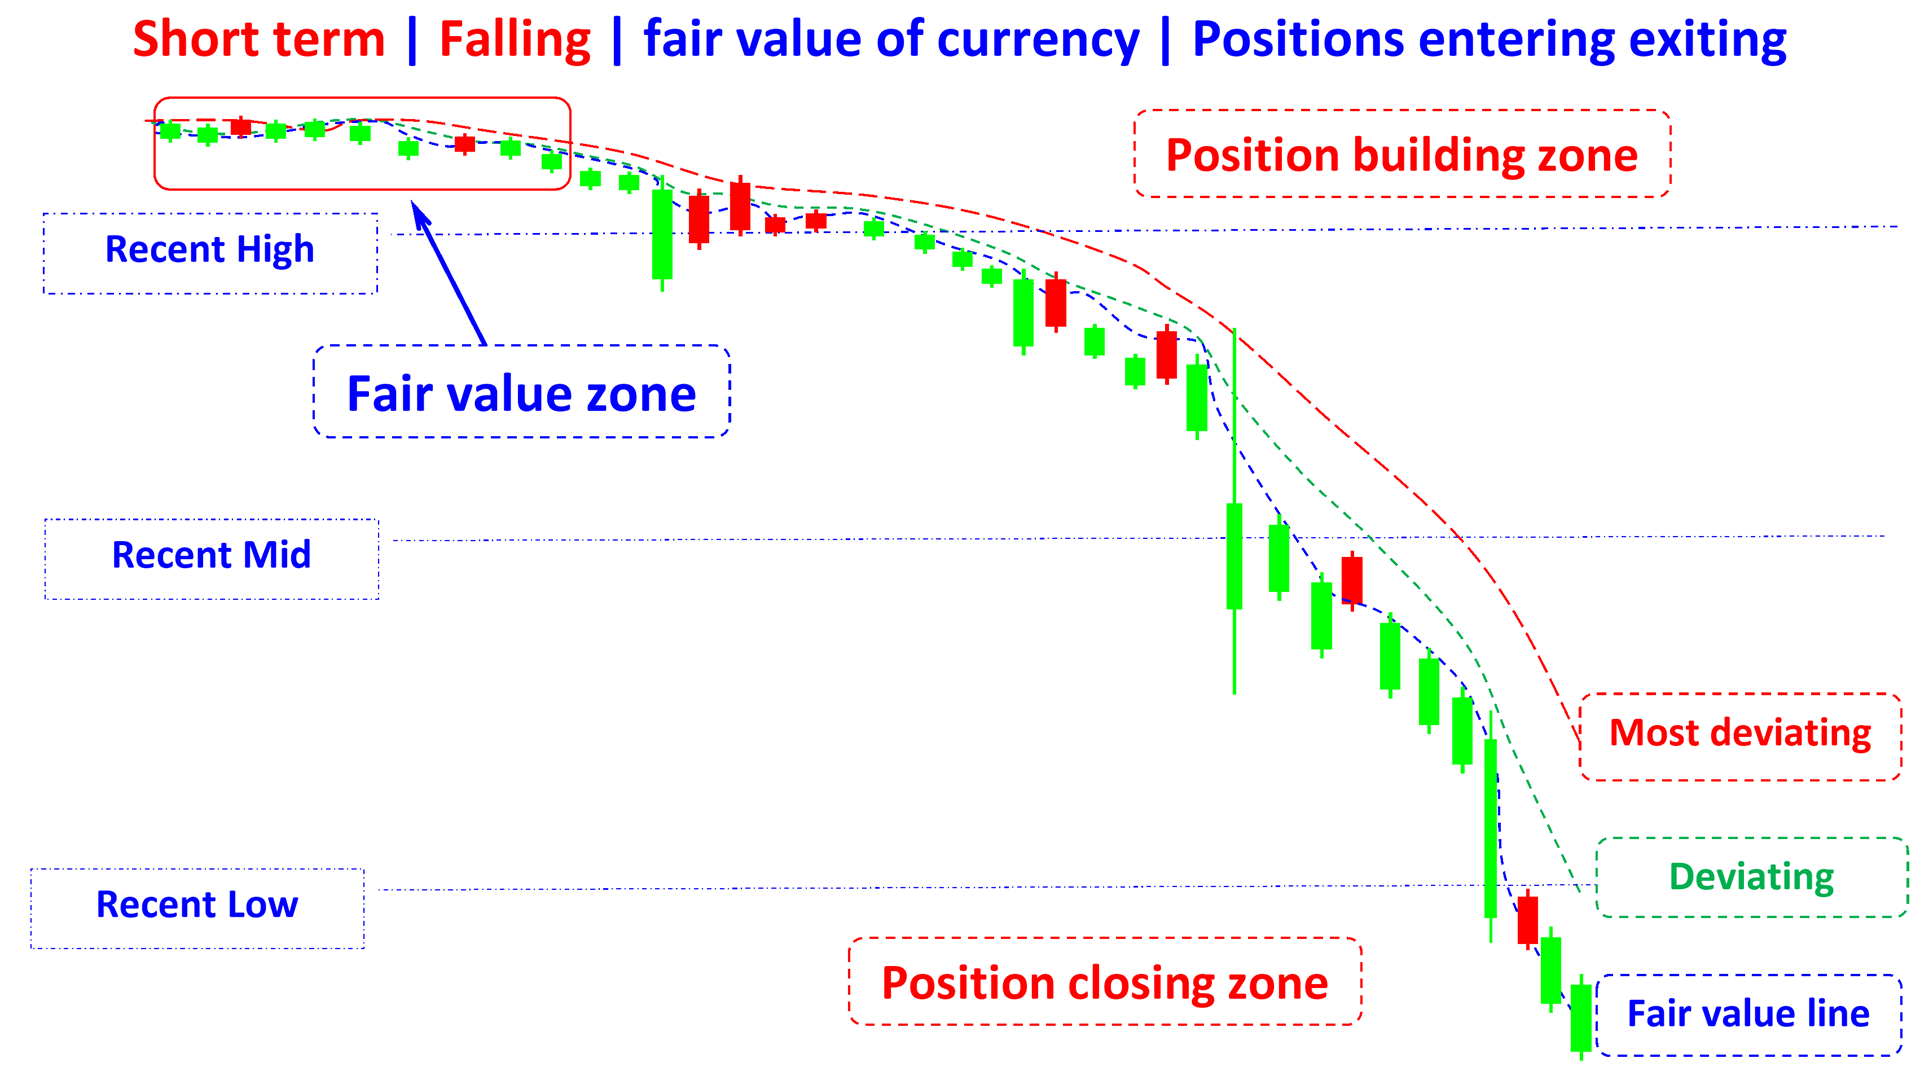 fair value indicators of currency in short terms falling en